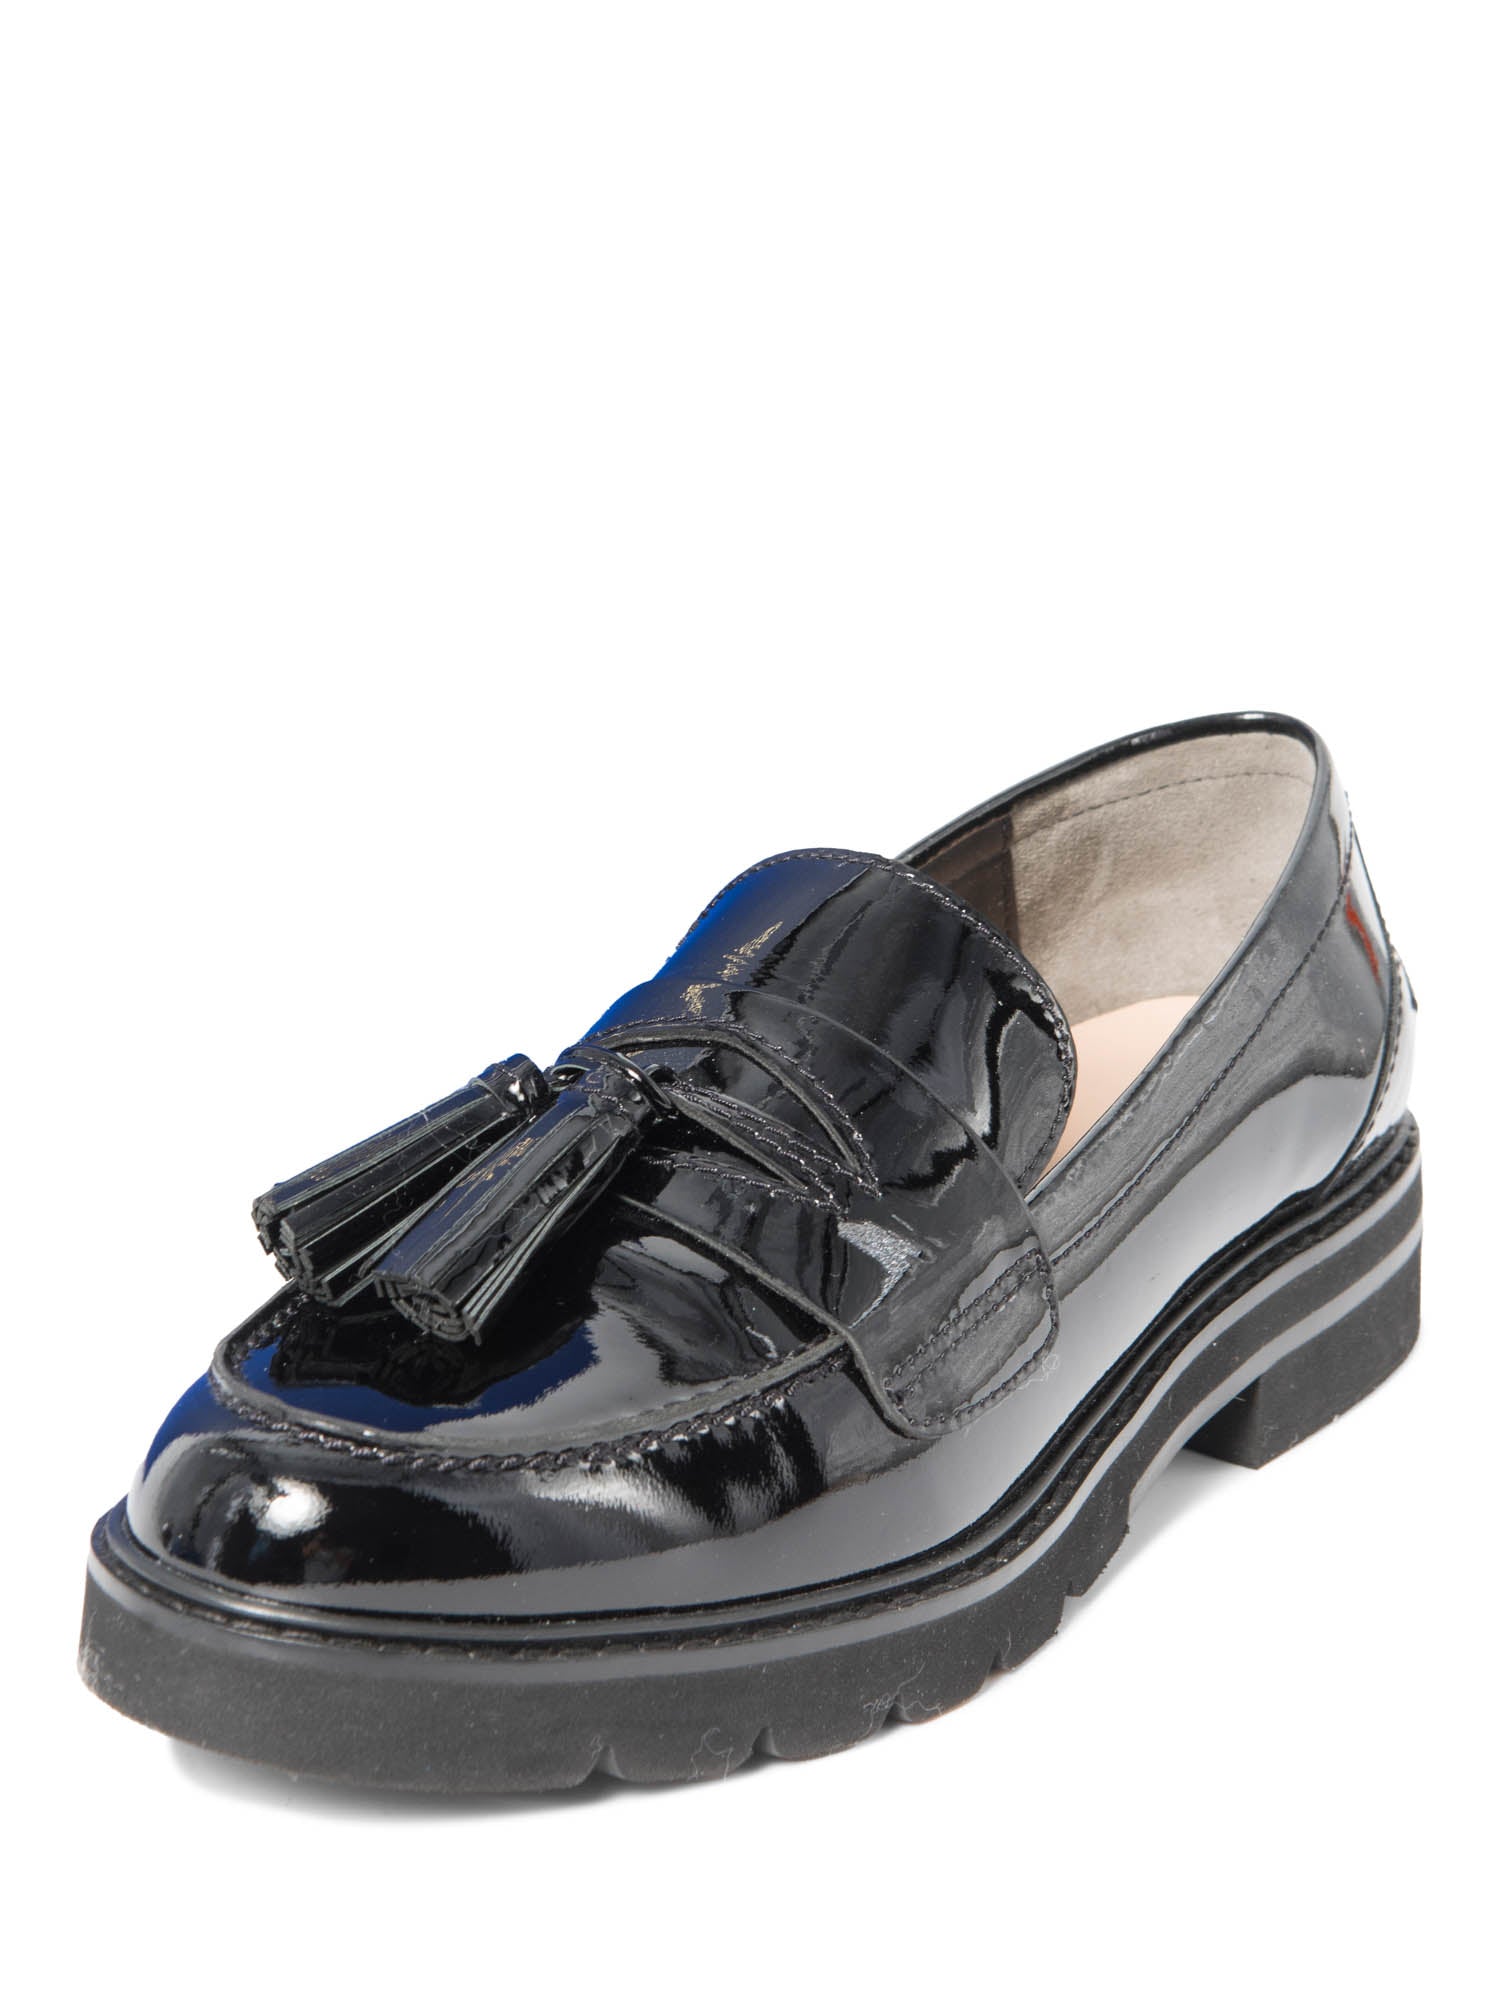 Stuart Weitzman Patent Leather Tassel Adrina Loafers Black-designer resale